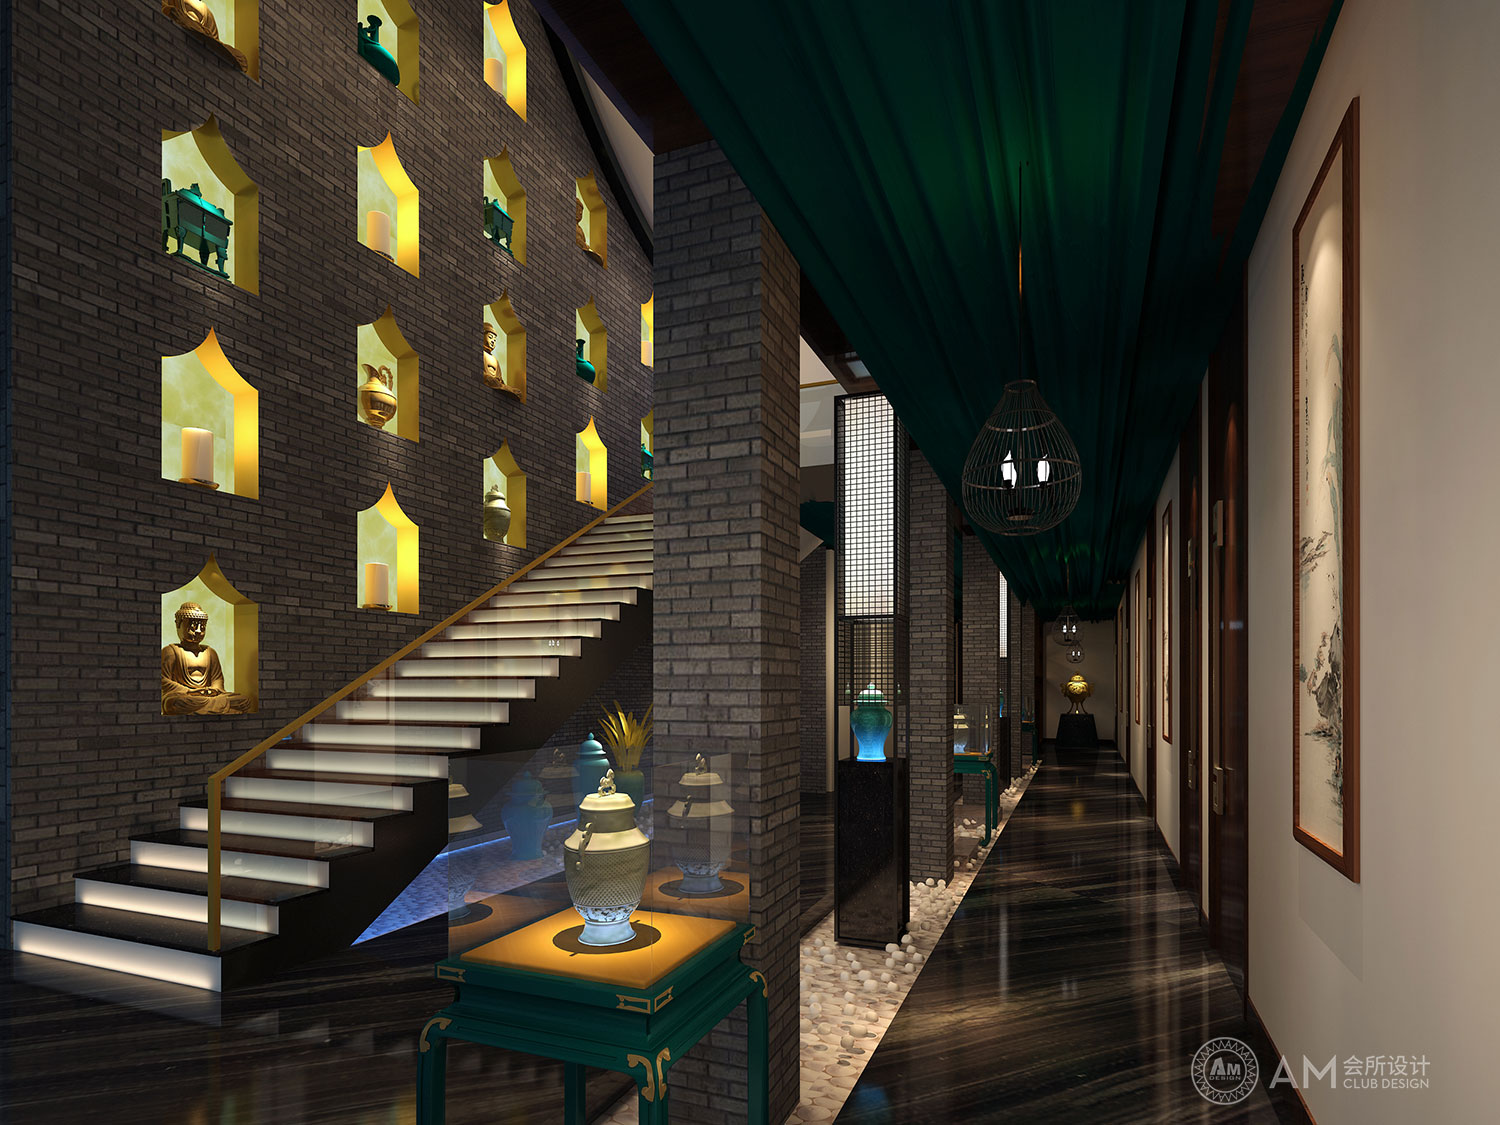 AM DESIGN | Staircase & corridor design of qilinhui Top Spa Club